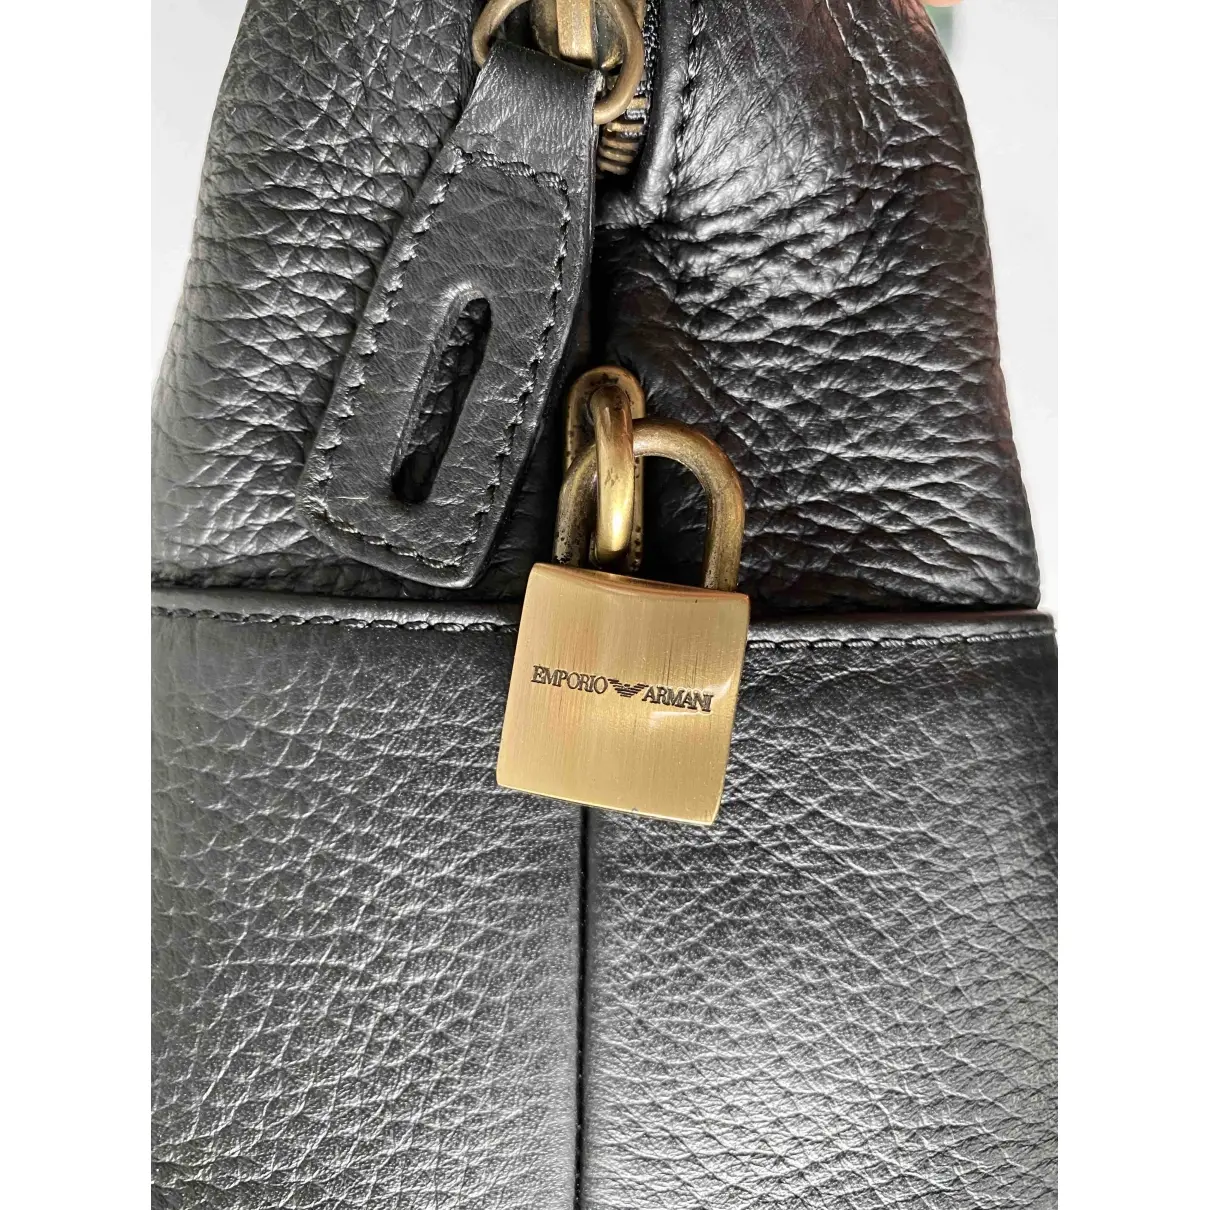 Emporio Armani Leather bag for sale